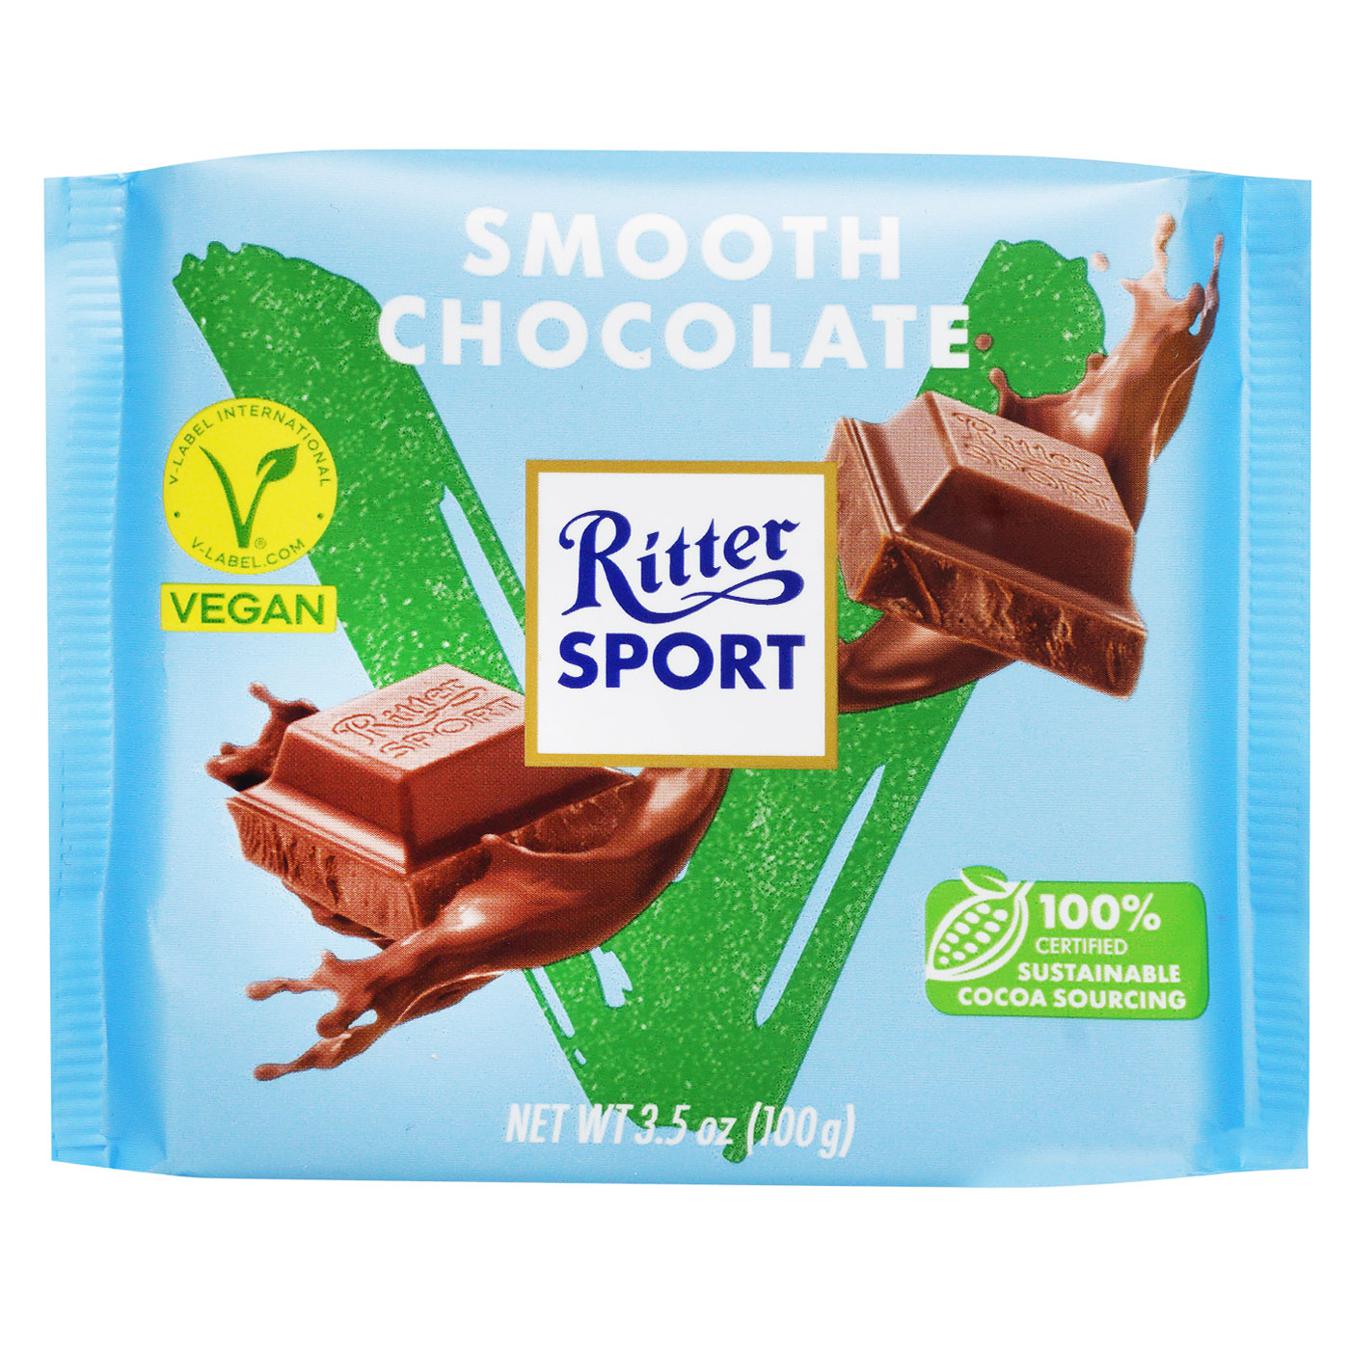 Ritter Sport VEGAN milk chocolate 100g